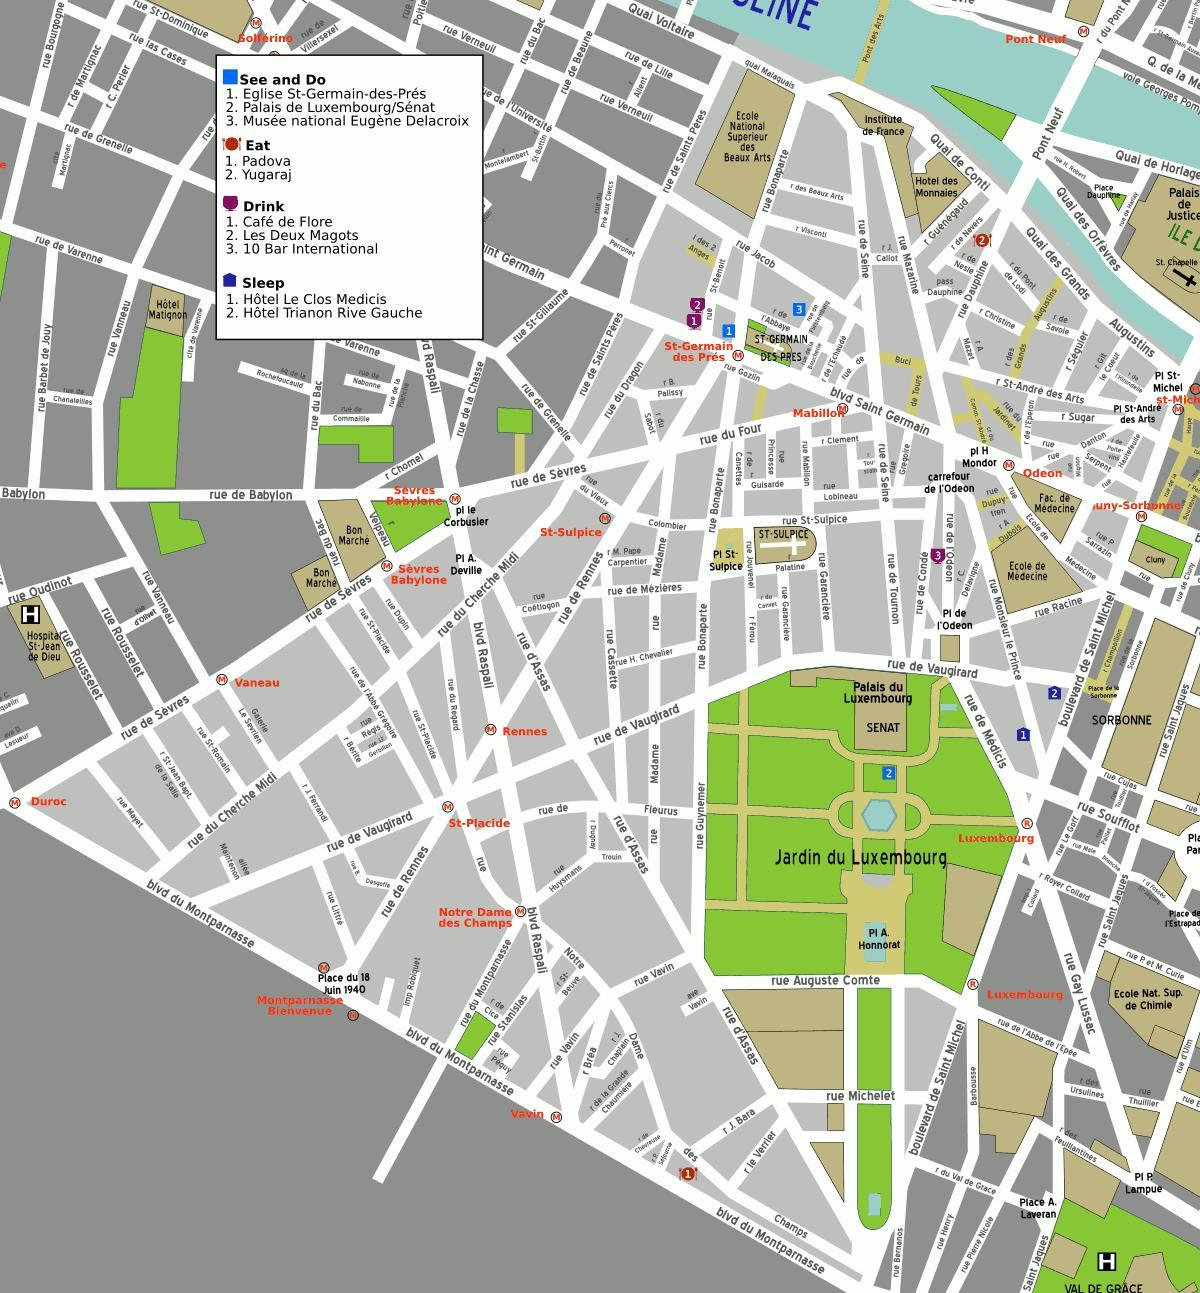 Harta e 6-të arrondissement e Parisit